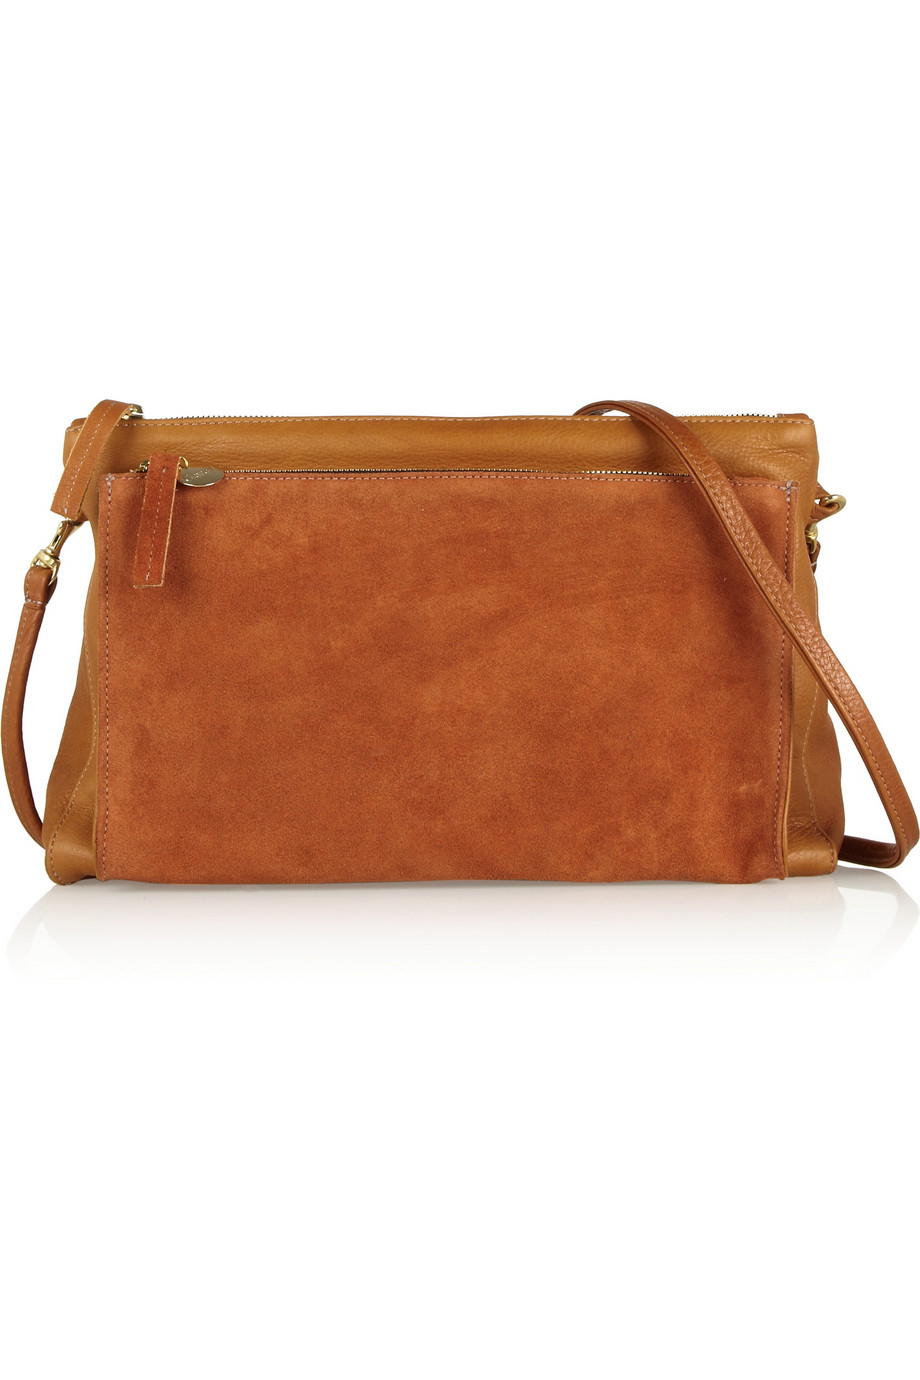 Clare V. Leather Trim Suede Crossbody Bag - Brown Crossbody Bags, Handbags  - W2437264